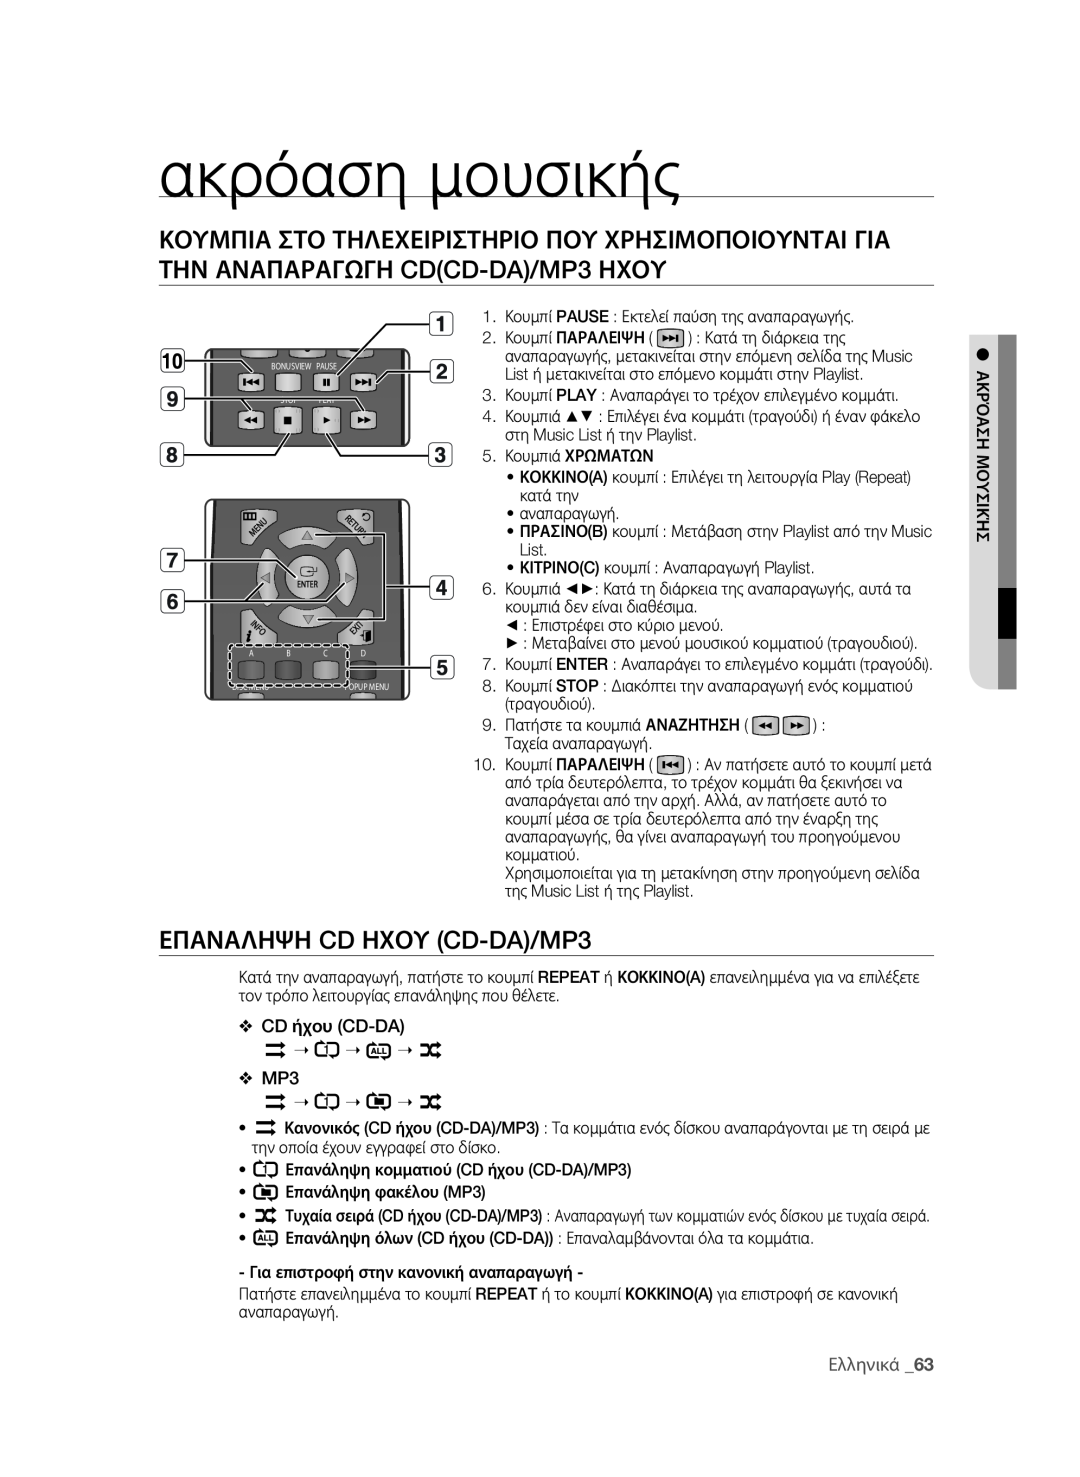 Samsung BD-P1580/EDC manual ακρόαση μουσικής, ΕΠΑΝΑΛΗΨΗ CD ΗΧΟΥ CD-DA/MP3, CD ήχου CD-DA, Ελληνικά 